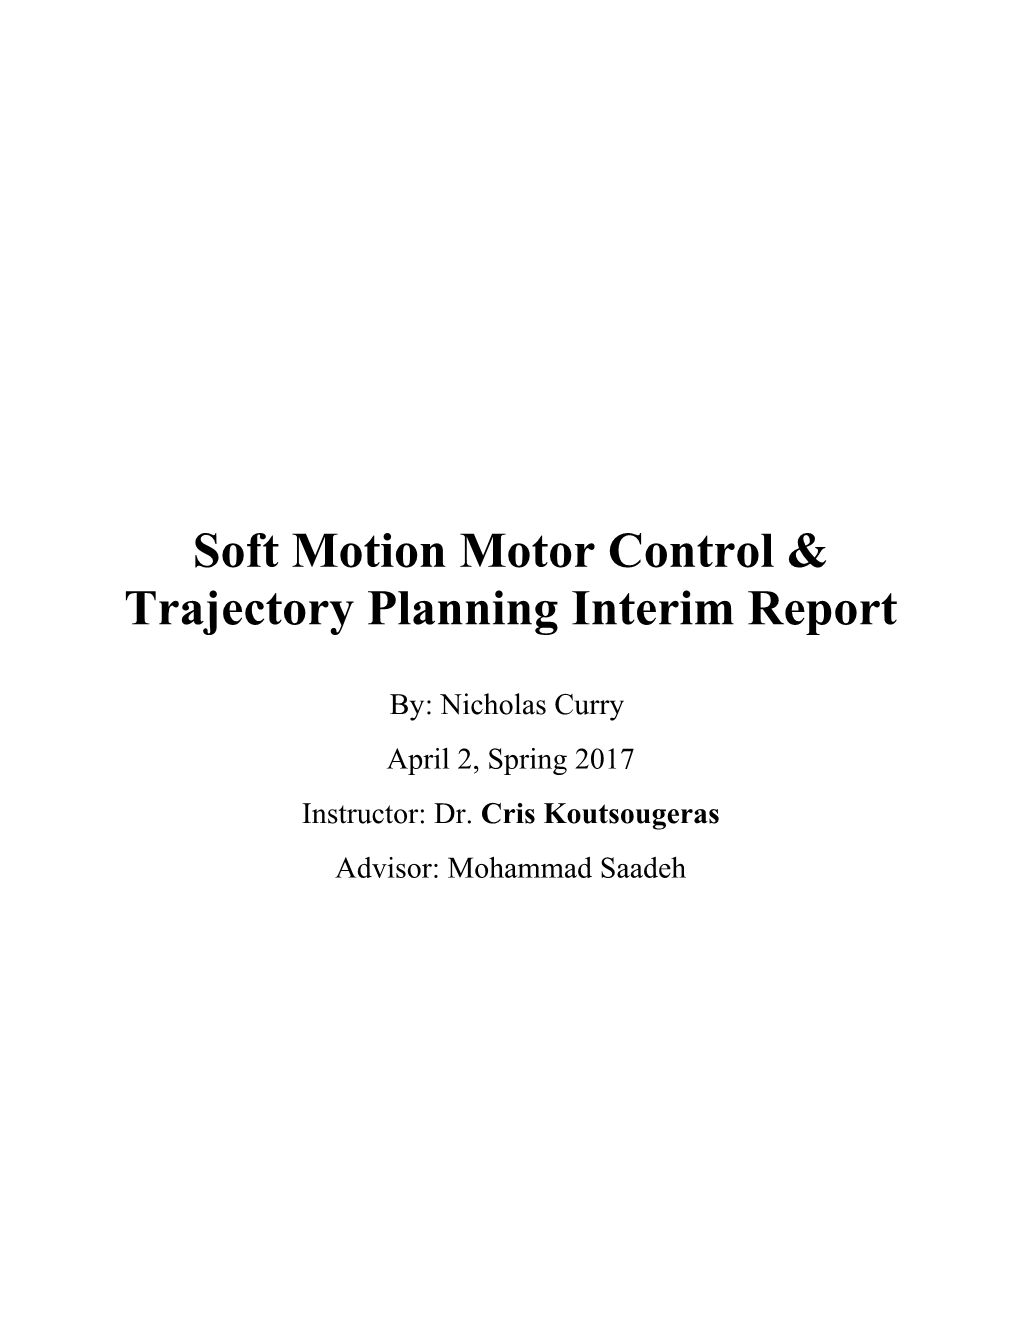 Soft Motion Motor Control & Trajectory Planninginterim Report